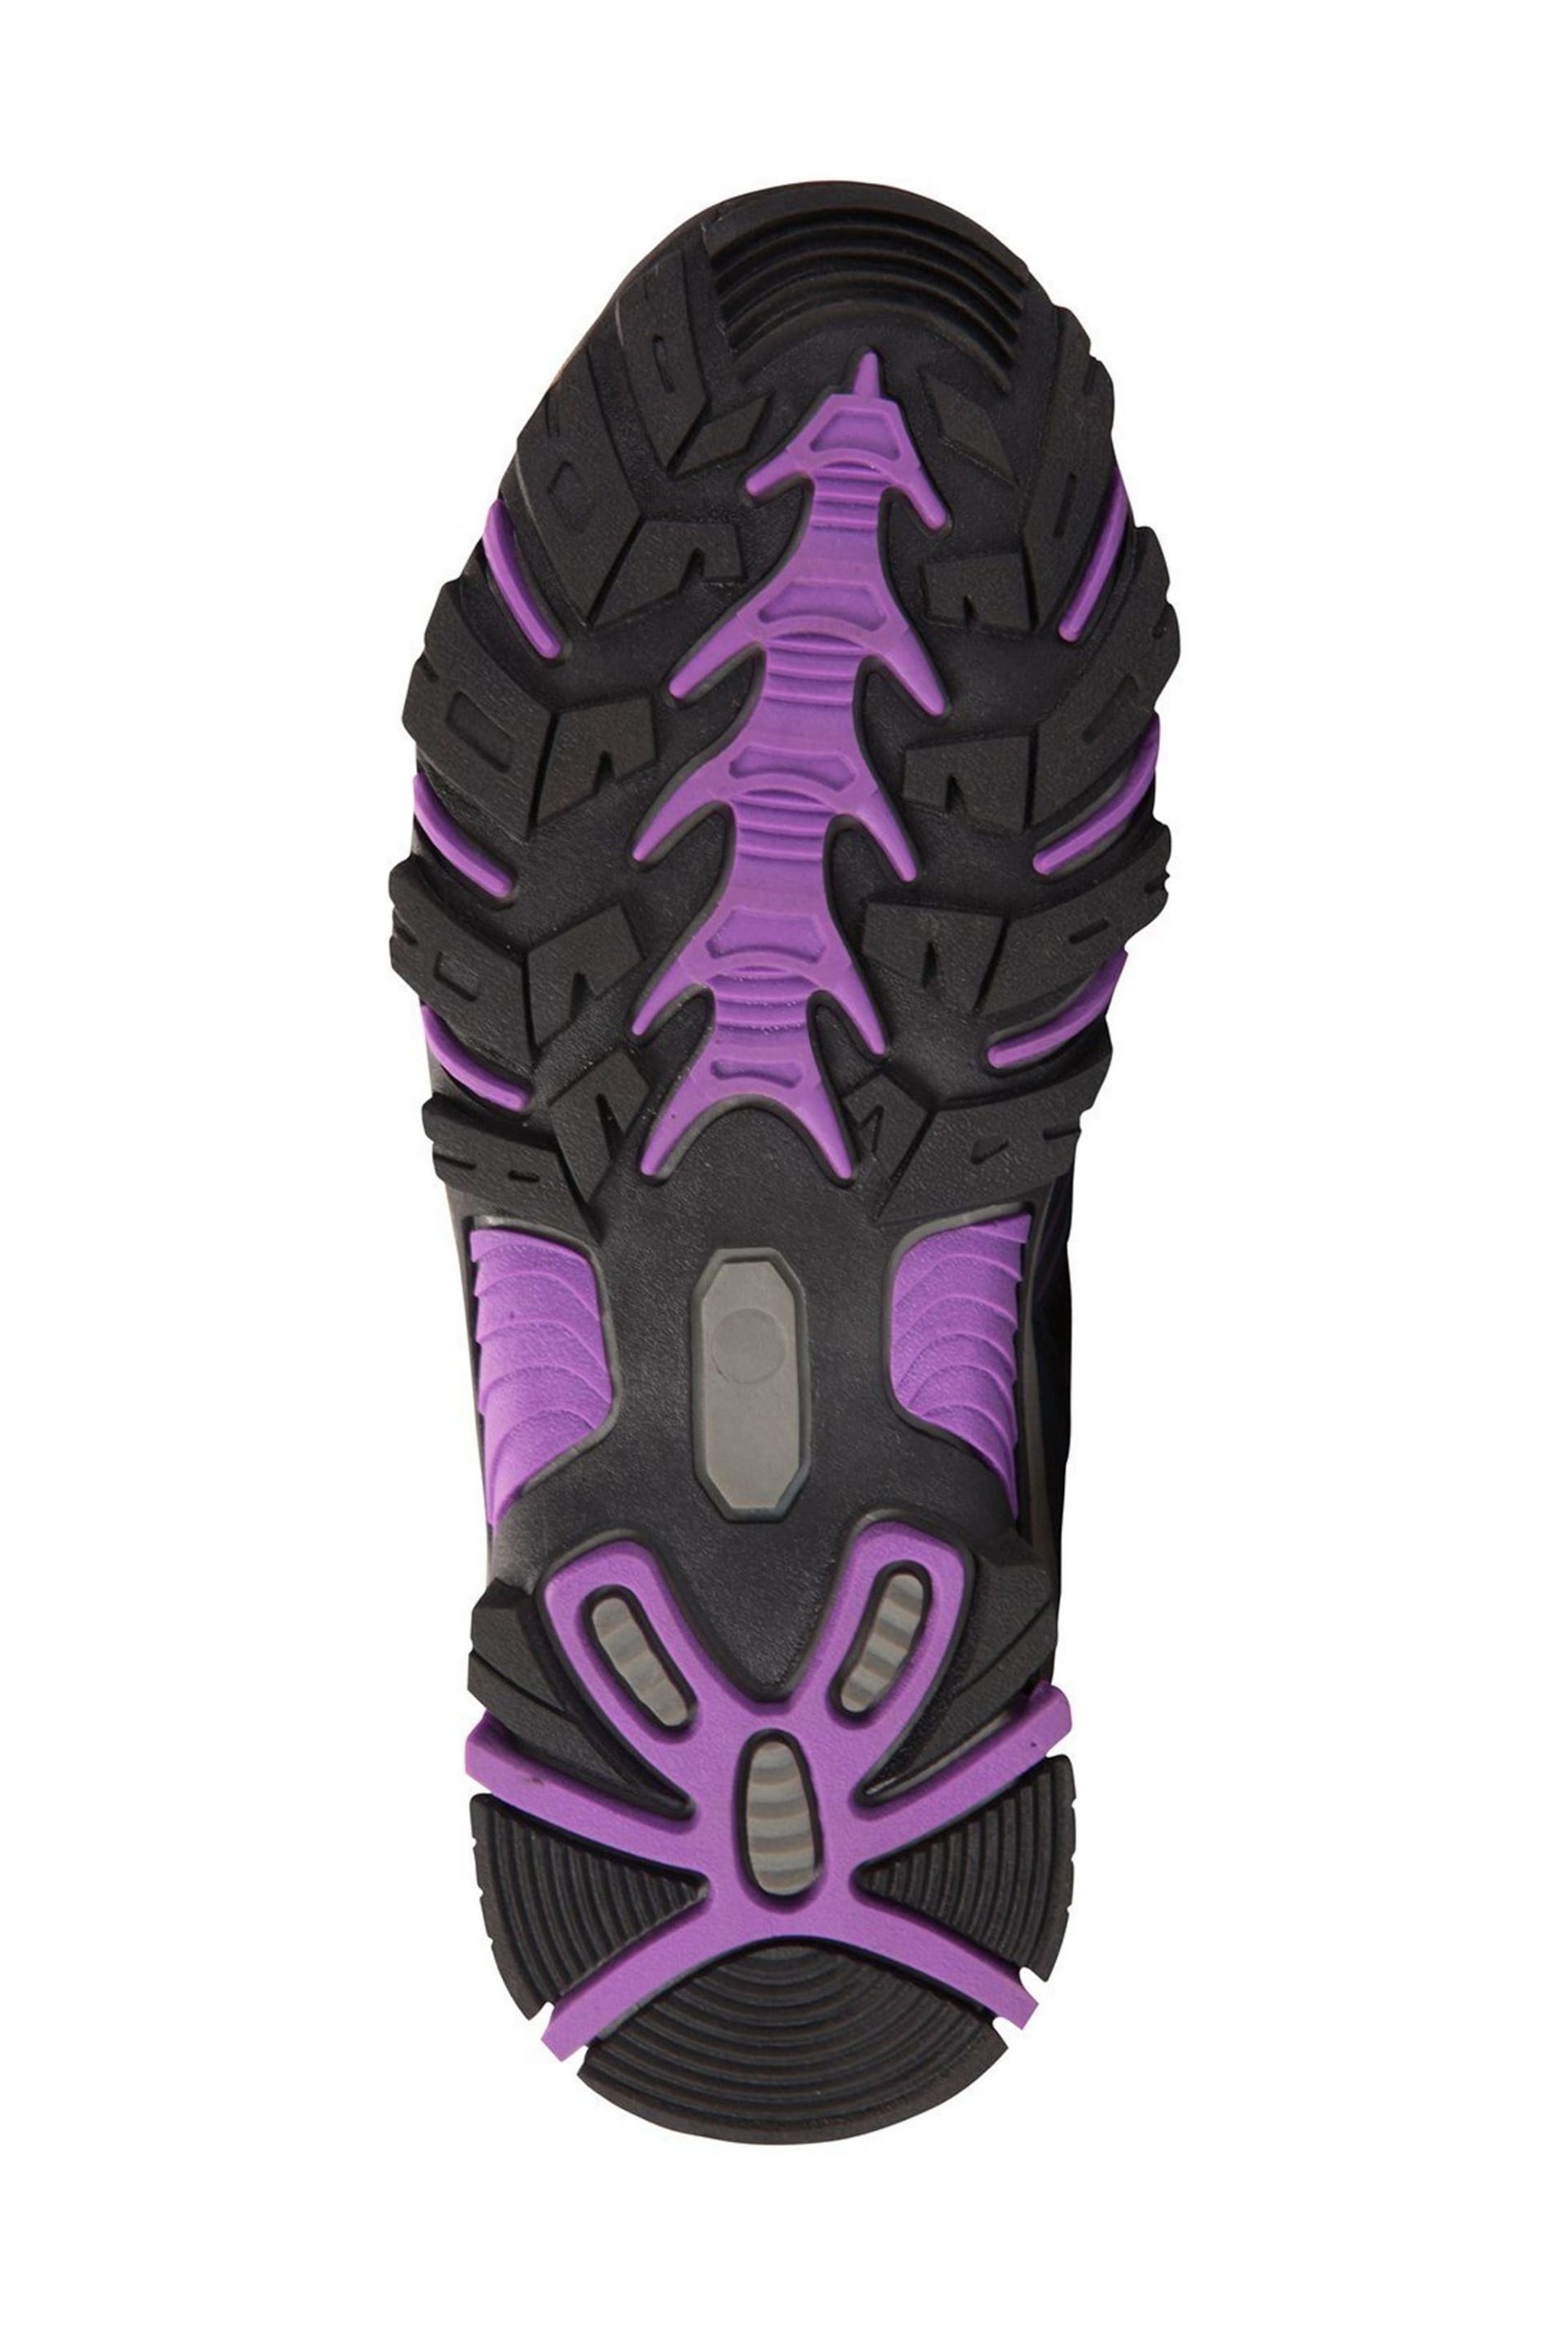 Mountain Warehouse Purple Oscar Kids Walking Boots - Image 3 of 4